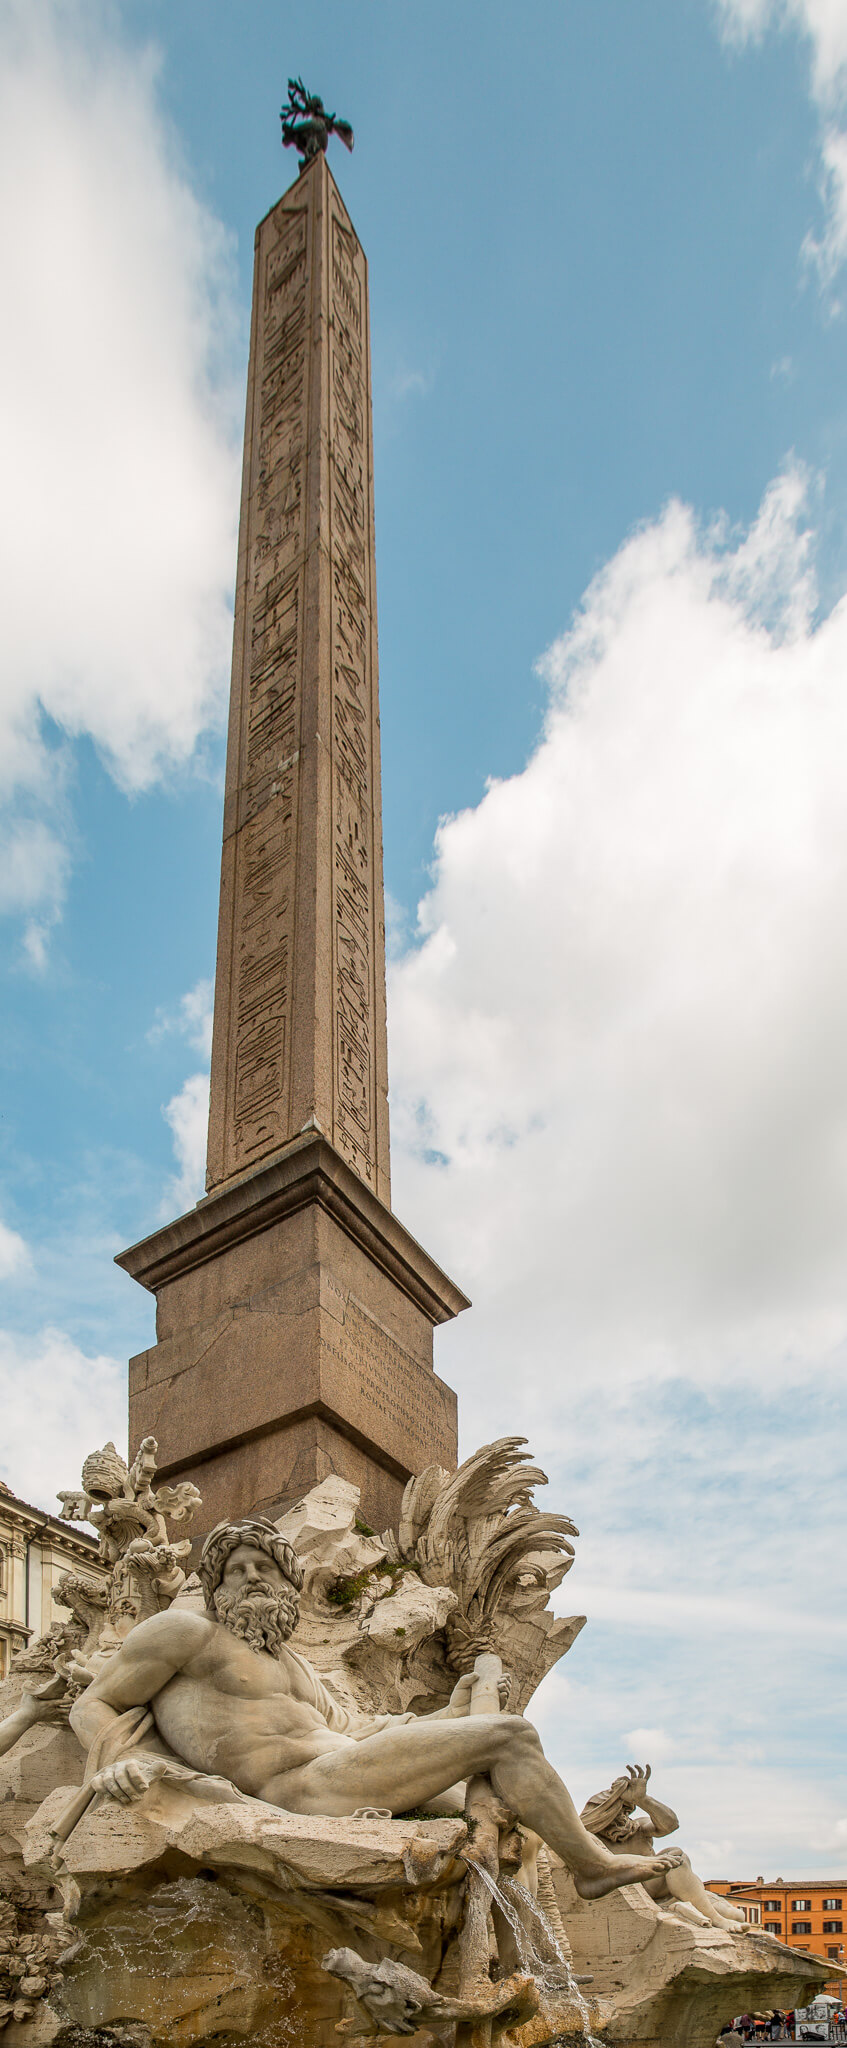 The Agonalis obelisk, part of the Fontana dei Quattro Fiumi in Piazza Navona